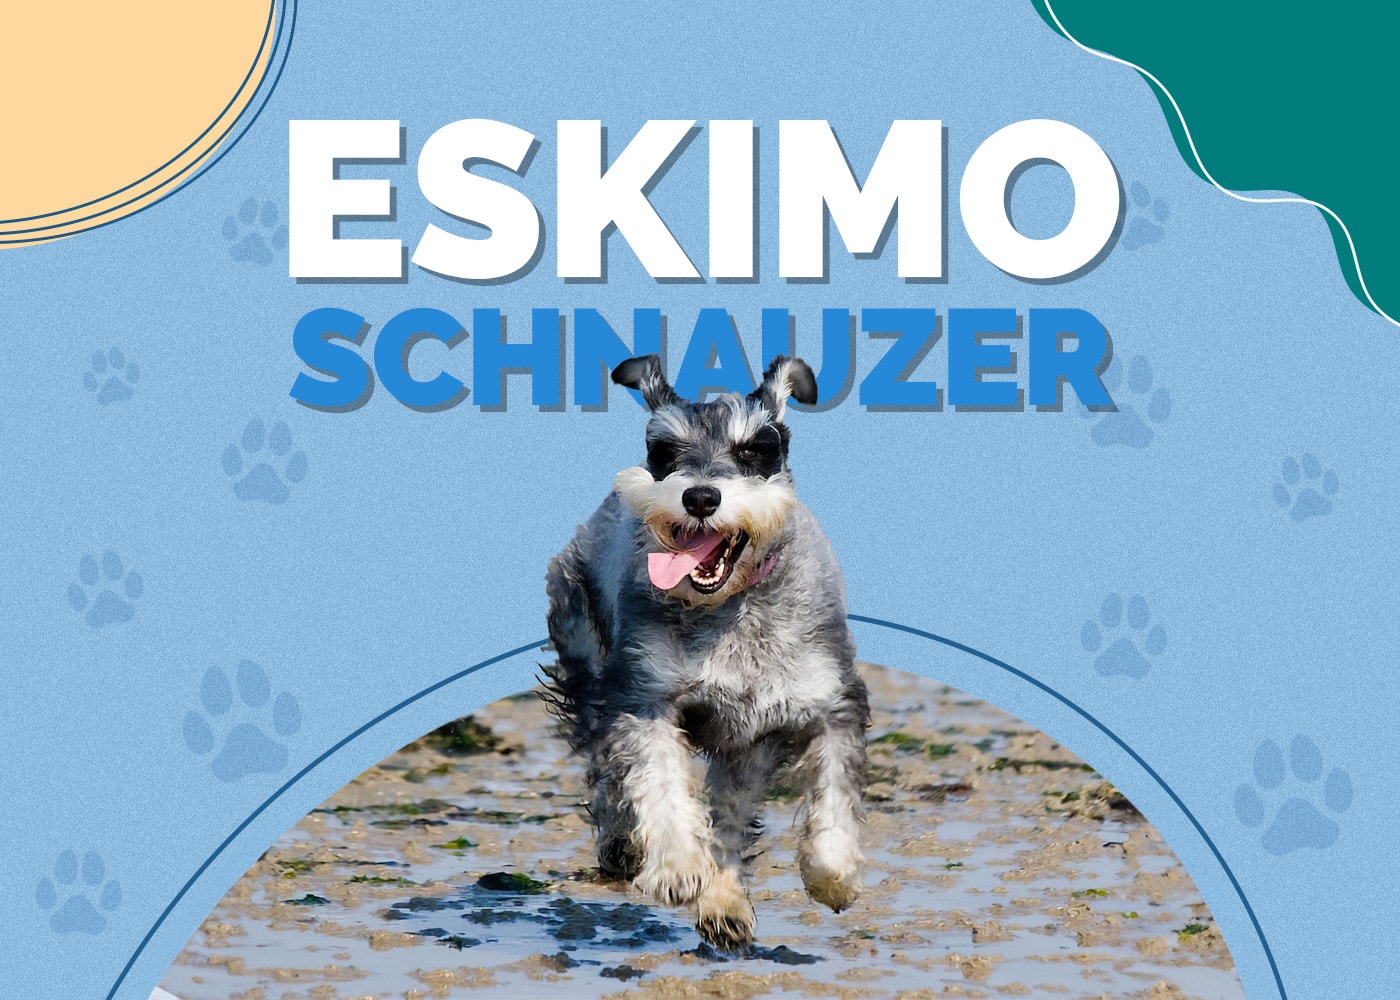 Eskimo Schnauzer (American Eskimo & Schnauzer Mix)